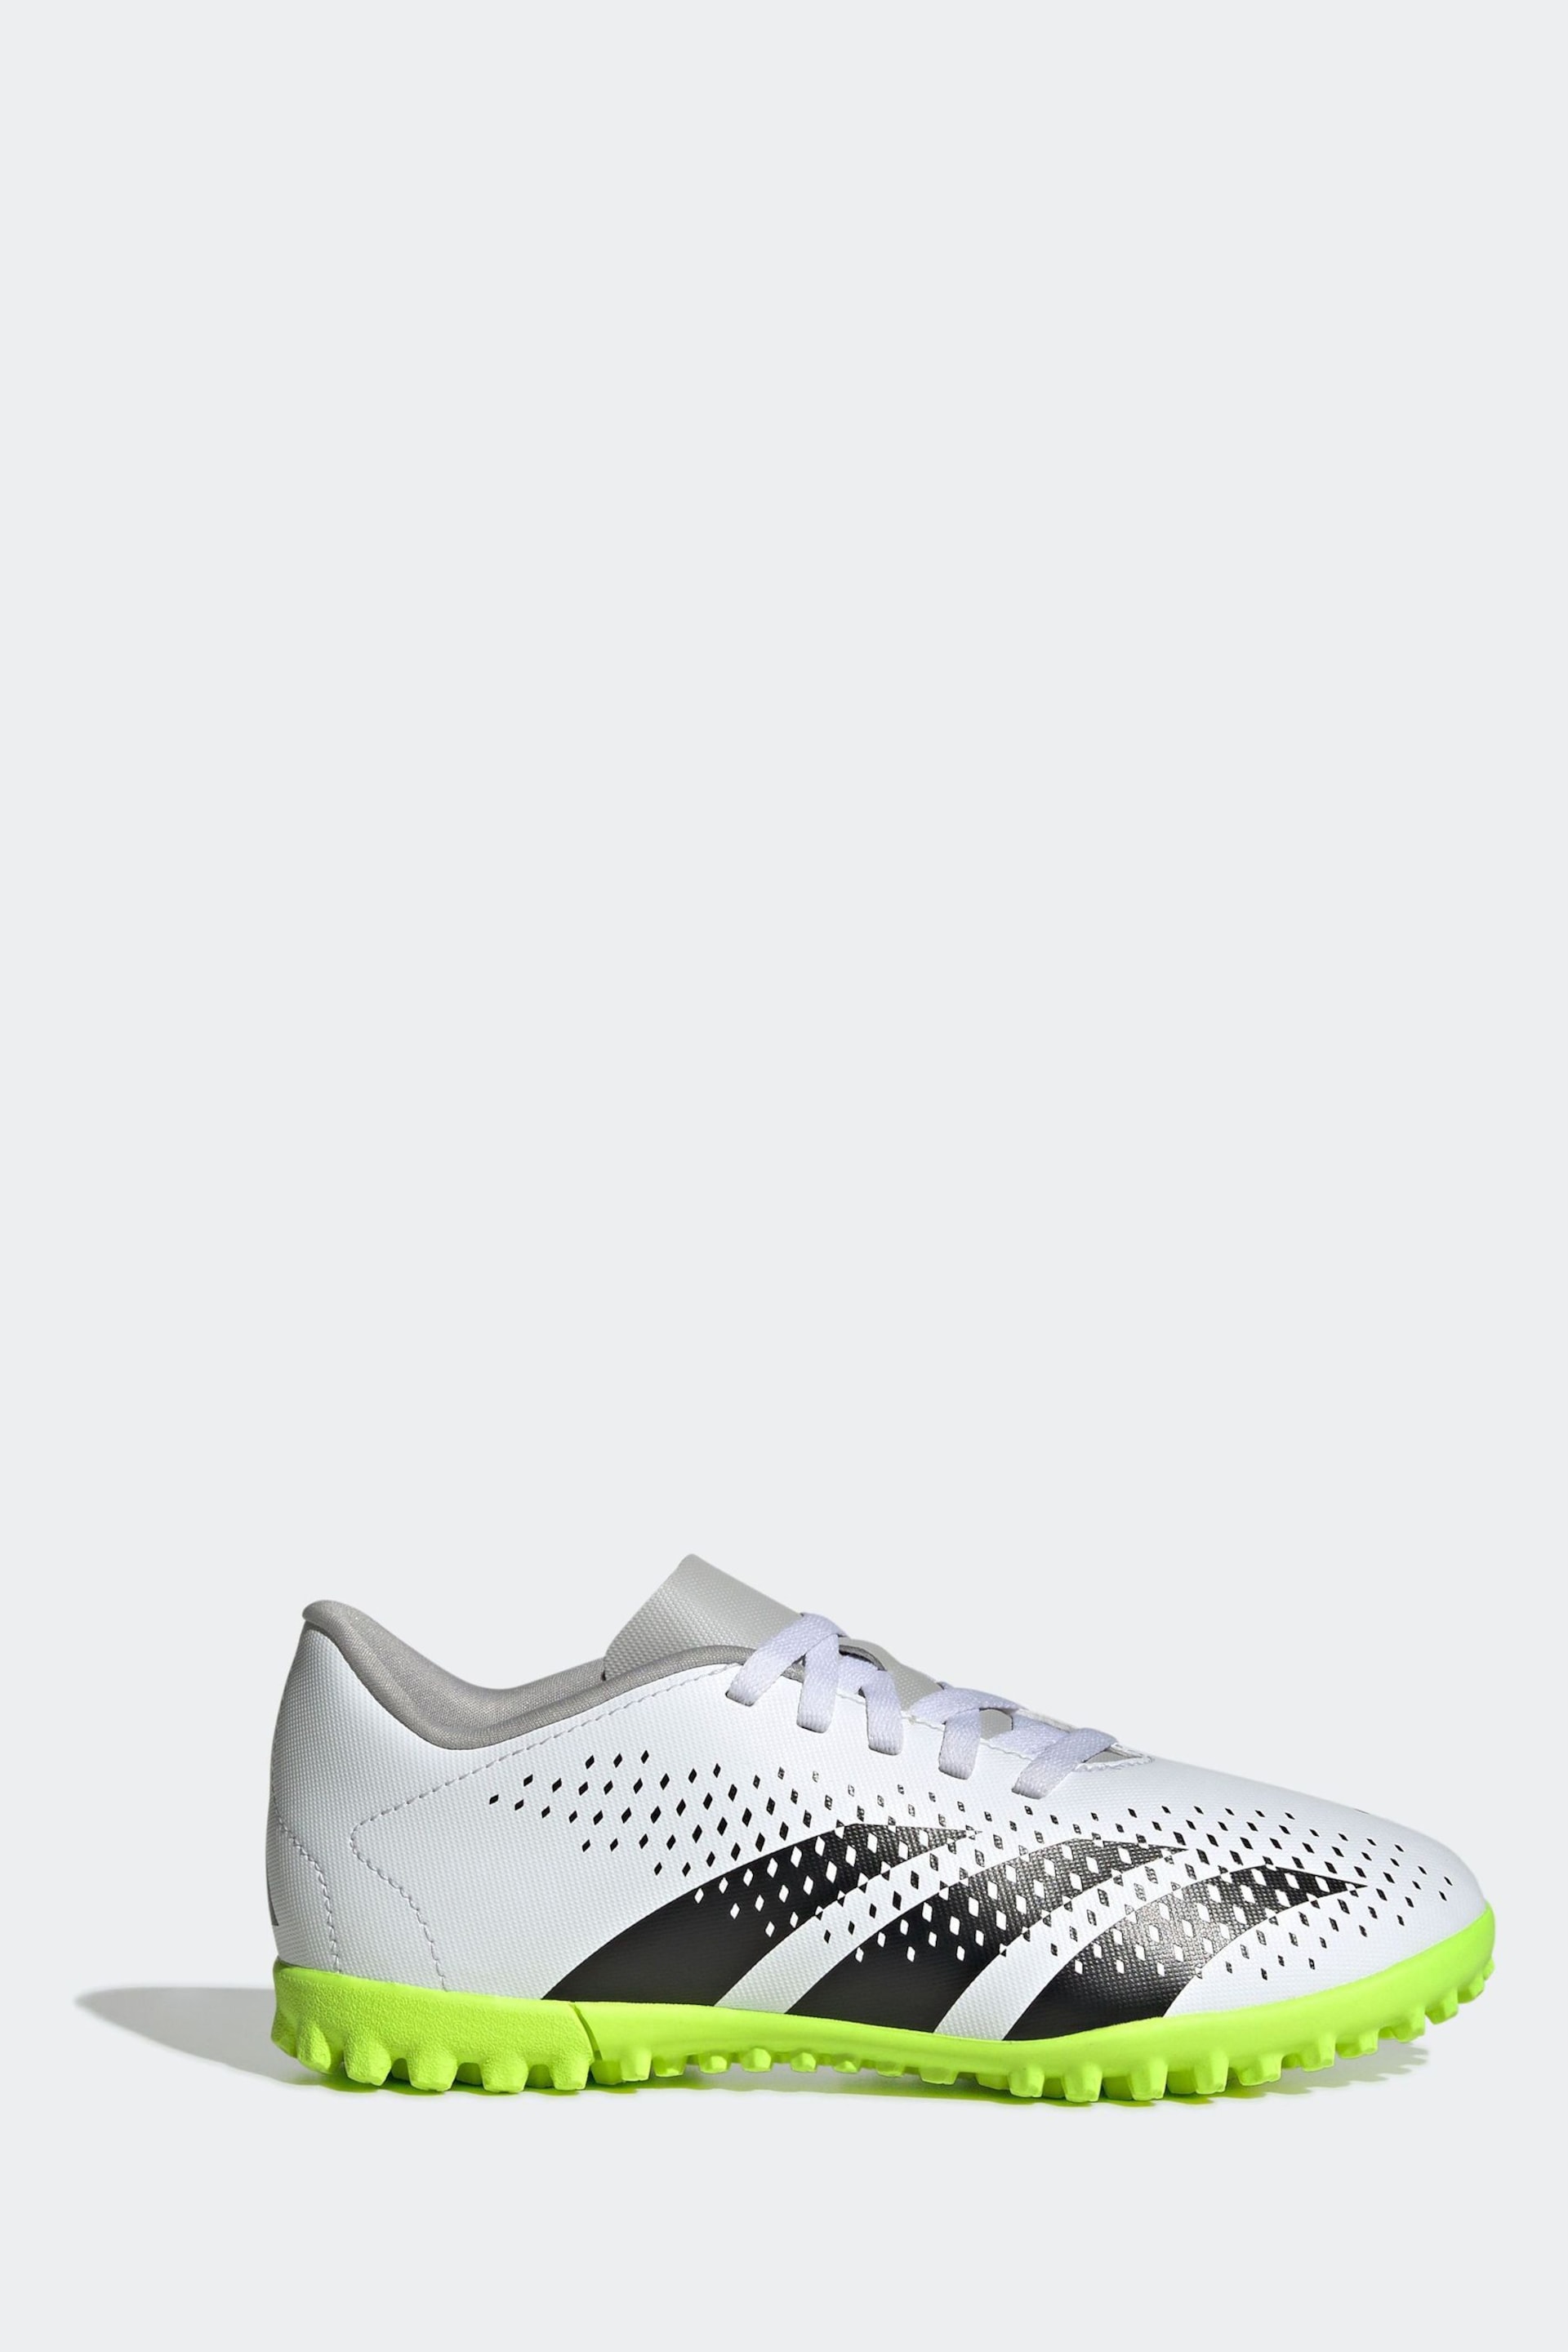 adidas White/Black Football Sport Kids Predator Accuracy.4 Turf Boots - Image 1 of 9